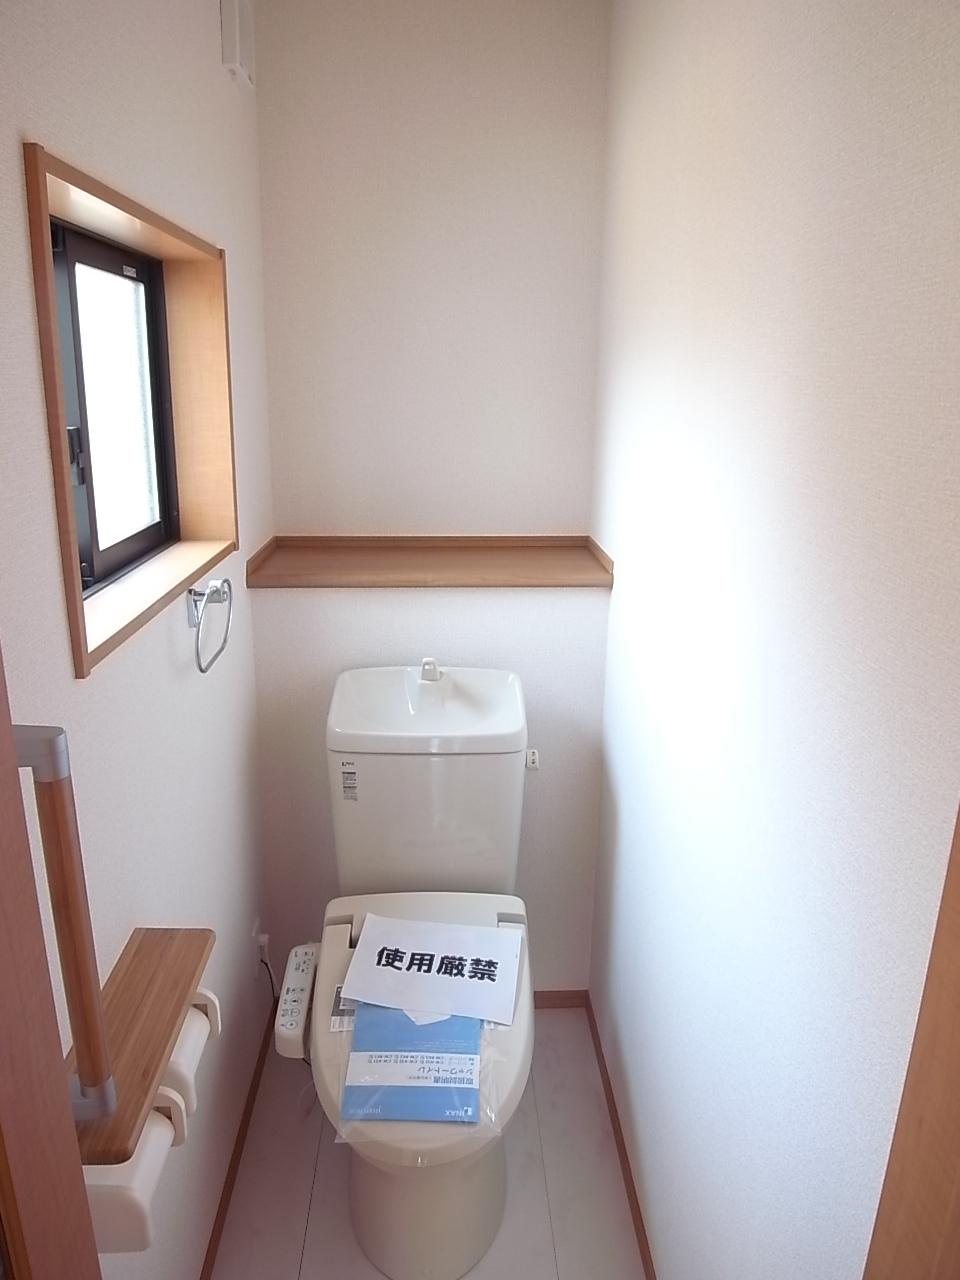 Toilet. 1 ・ Second floor toilet Bidet ・ Warm Rhett ・ Handrail equipped! 